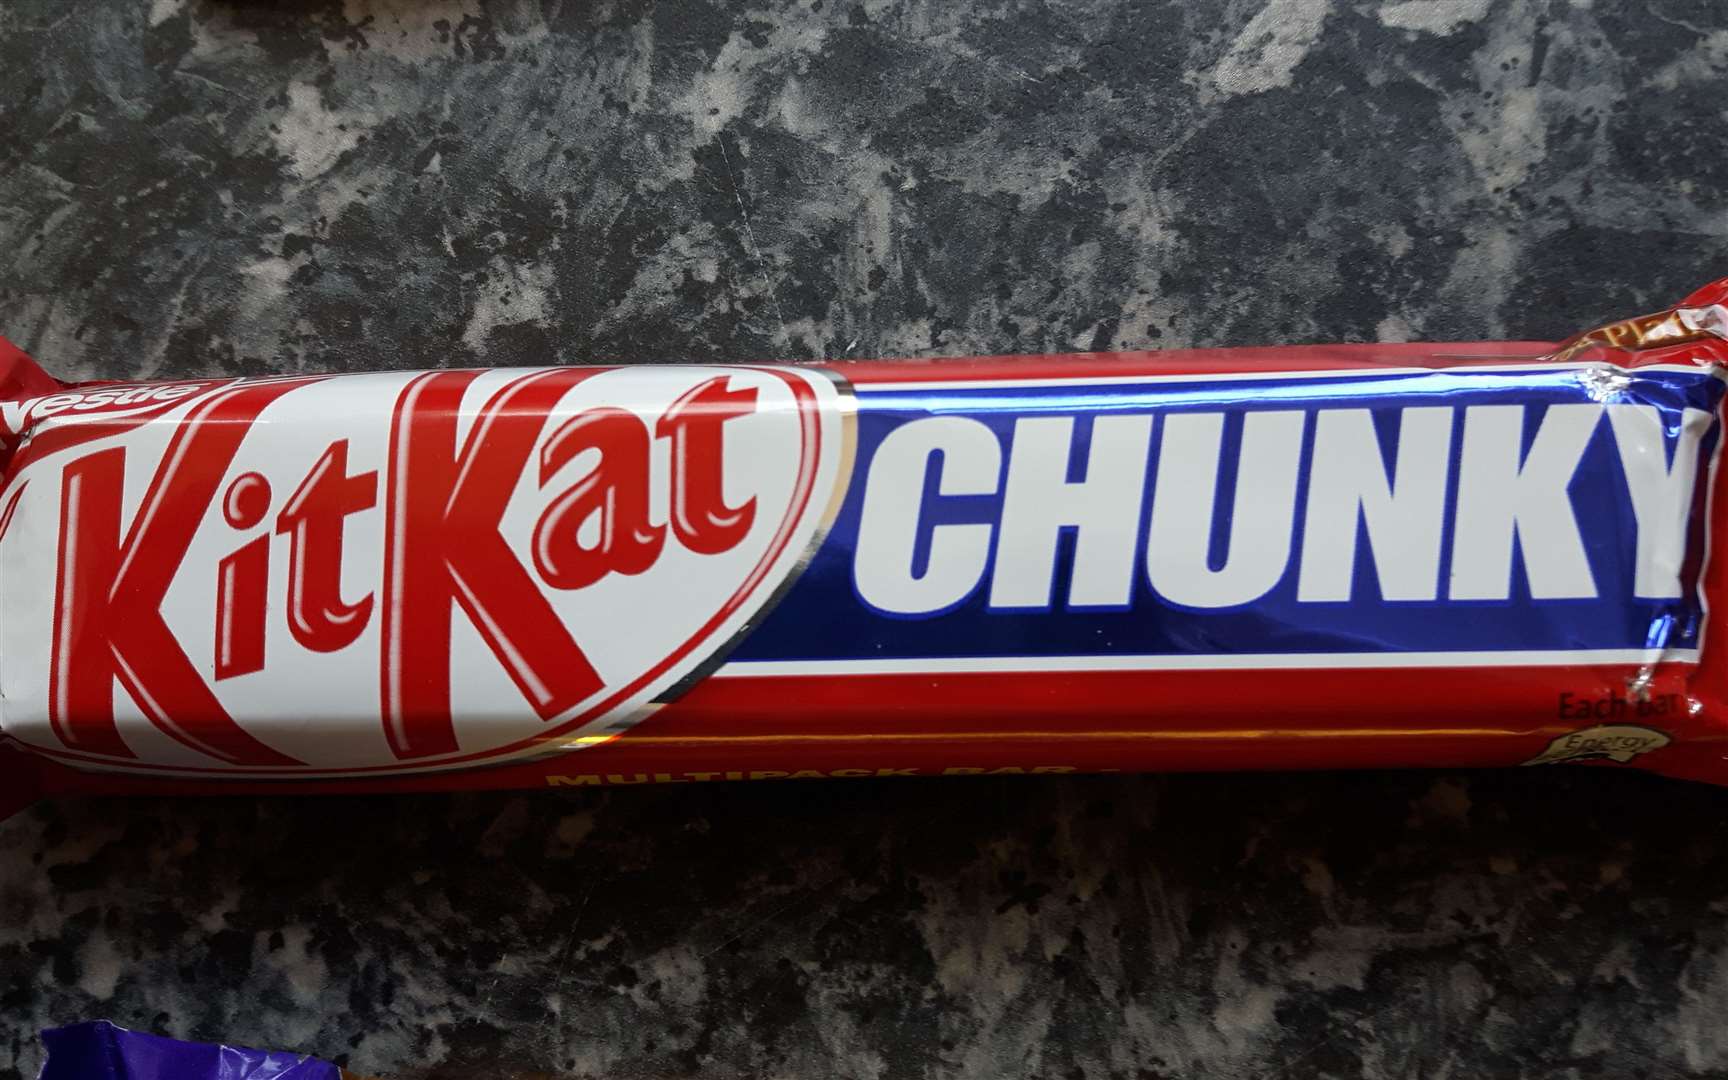 Nestlé is bringing back a KitKat Chunky flavour